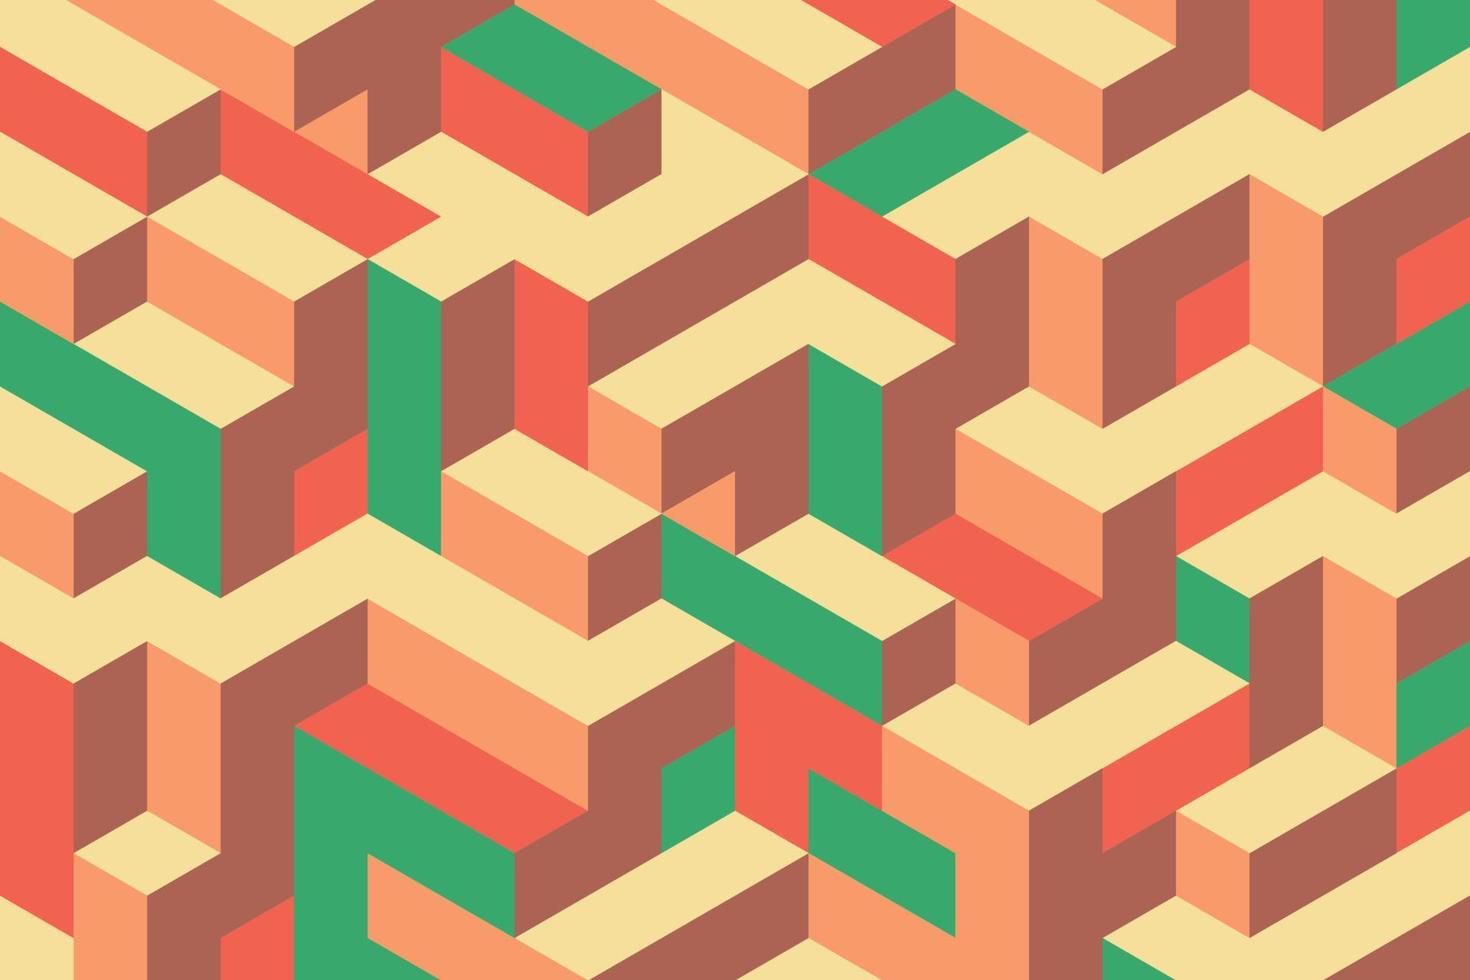 retro grön och röd isometrisk mosaik former mönster bakgrund i vintage geometrisk stil vektor